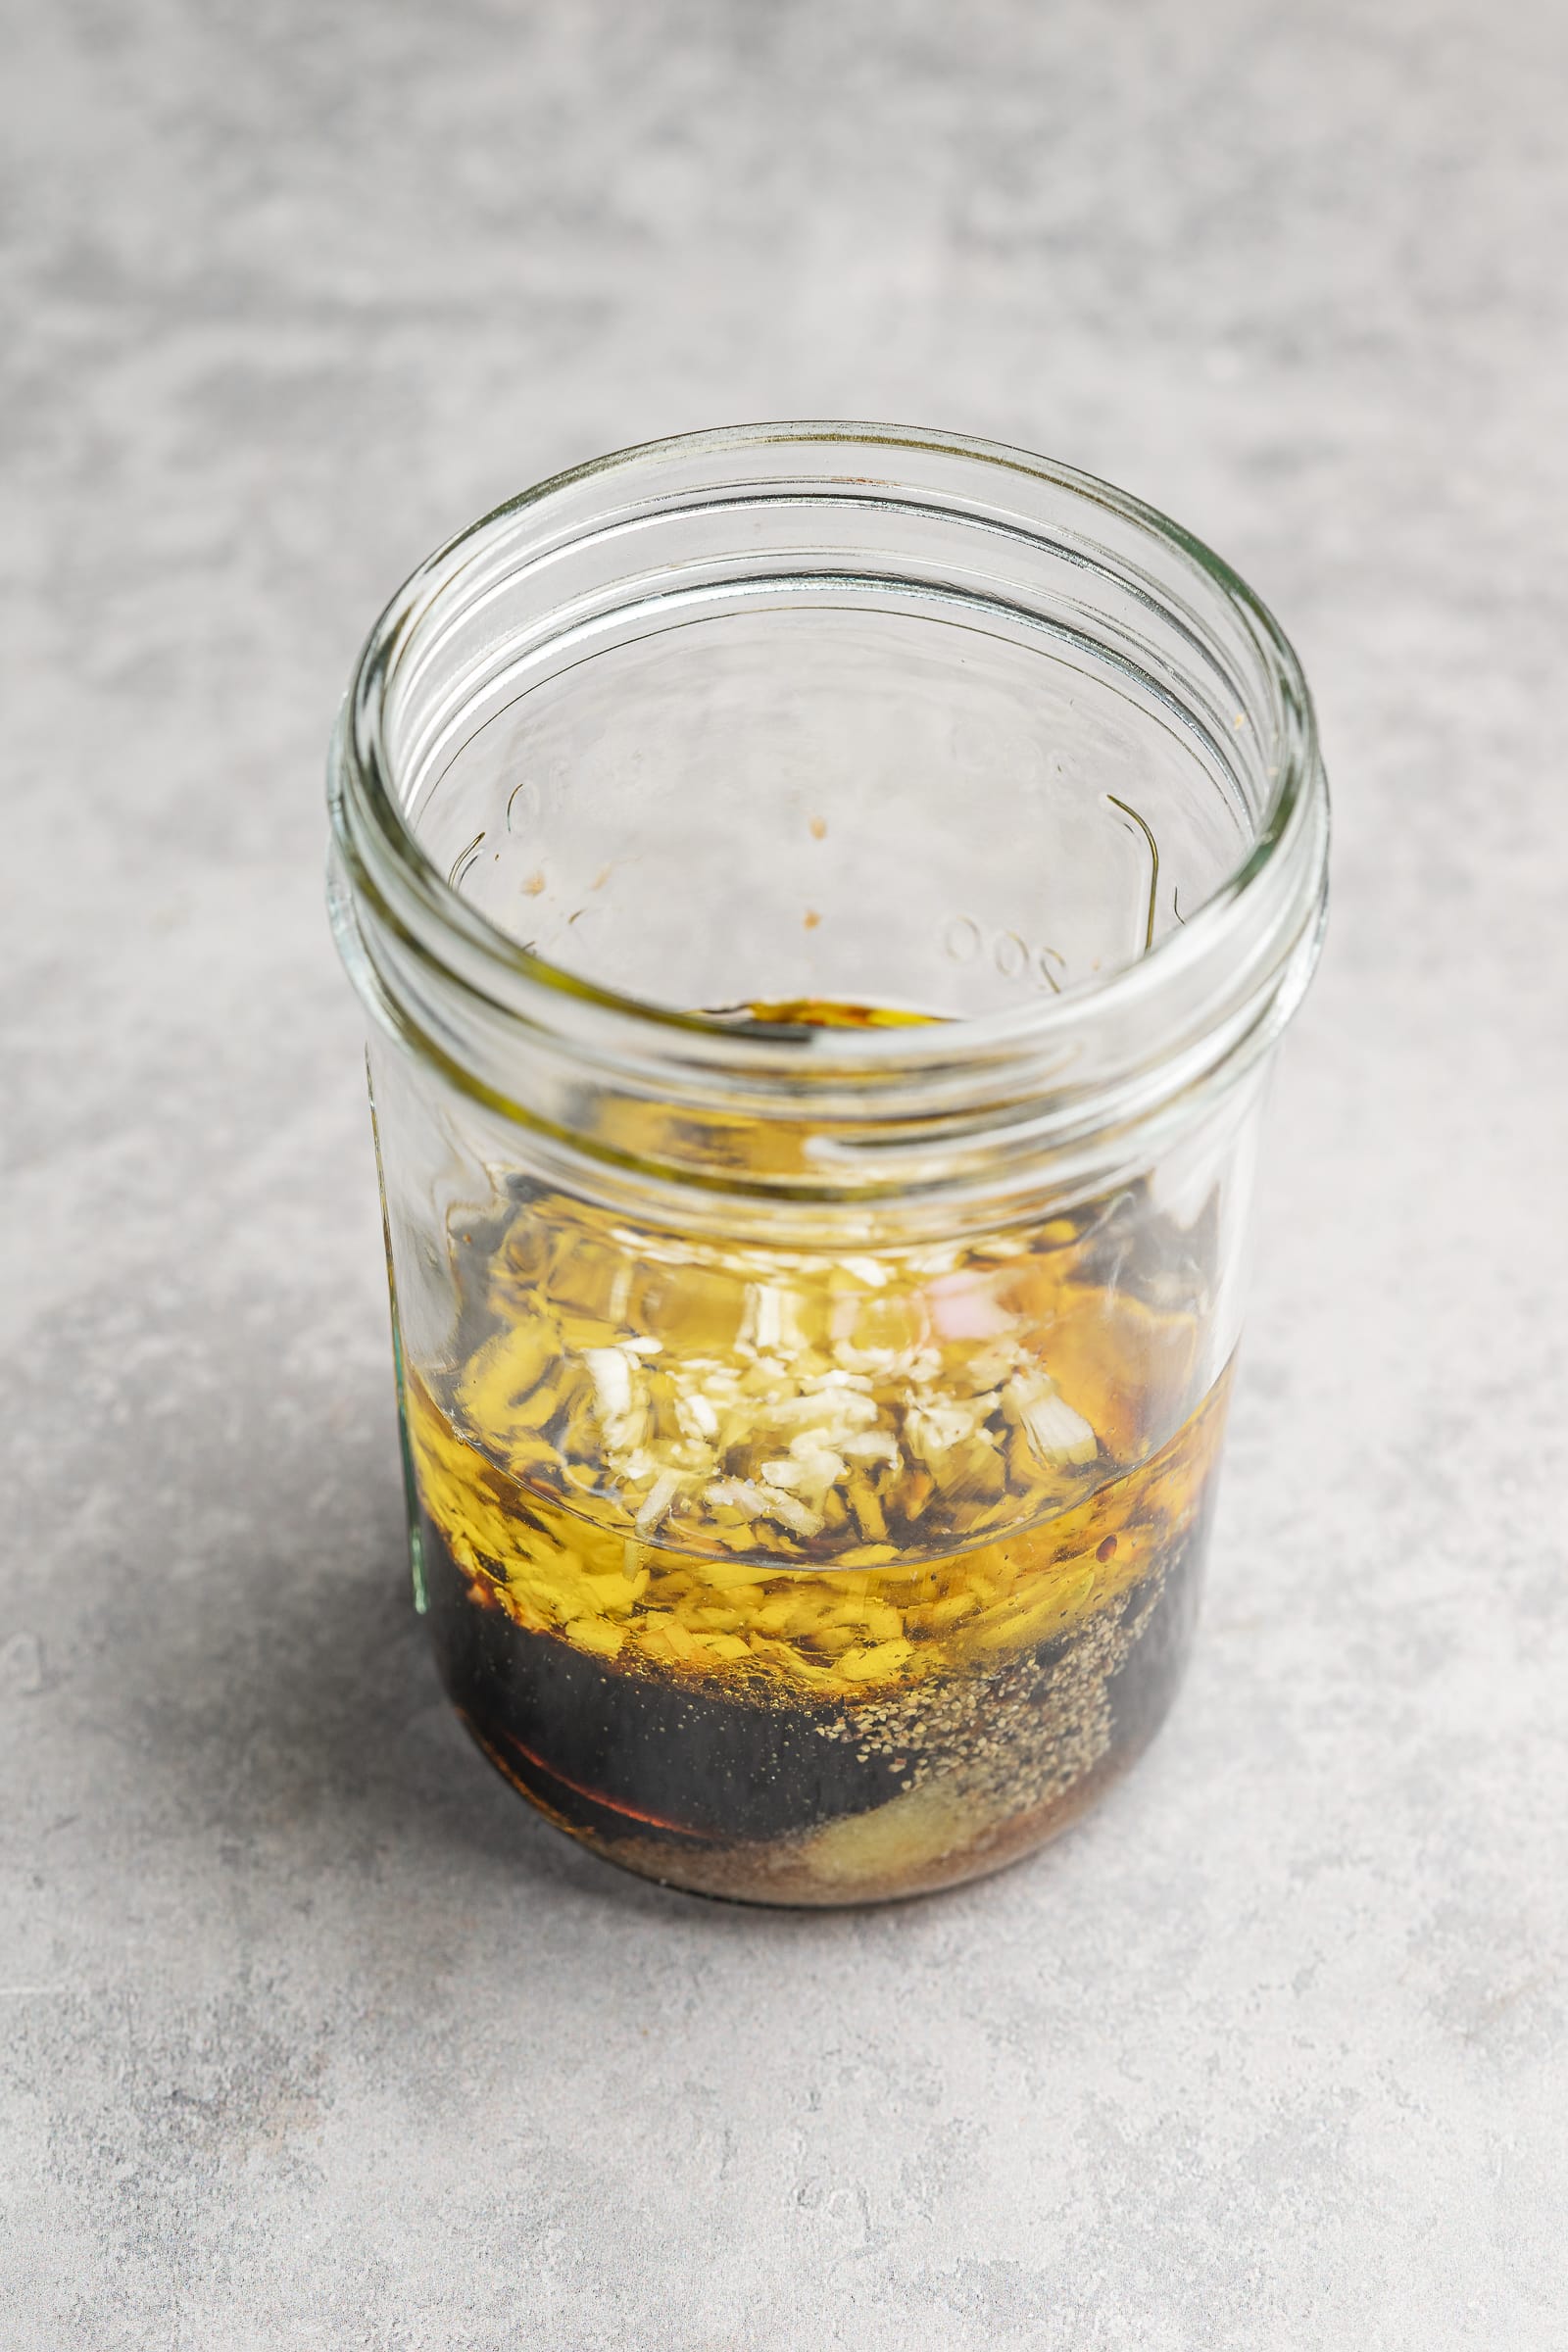 Maple balsamic dressing ingredients in a jar.